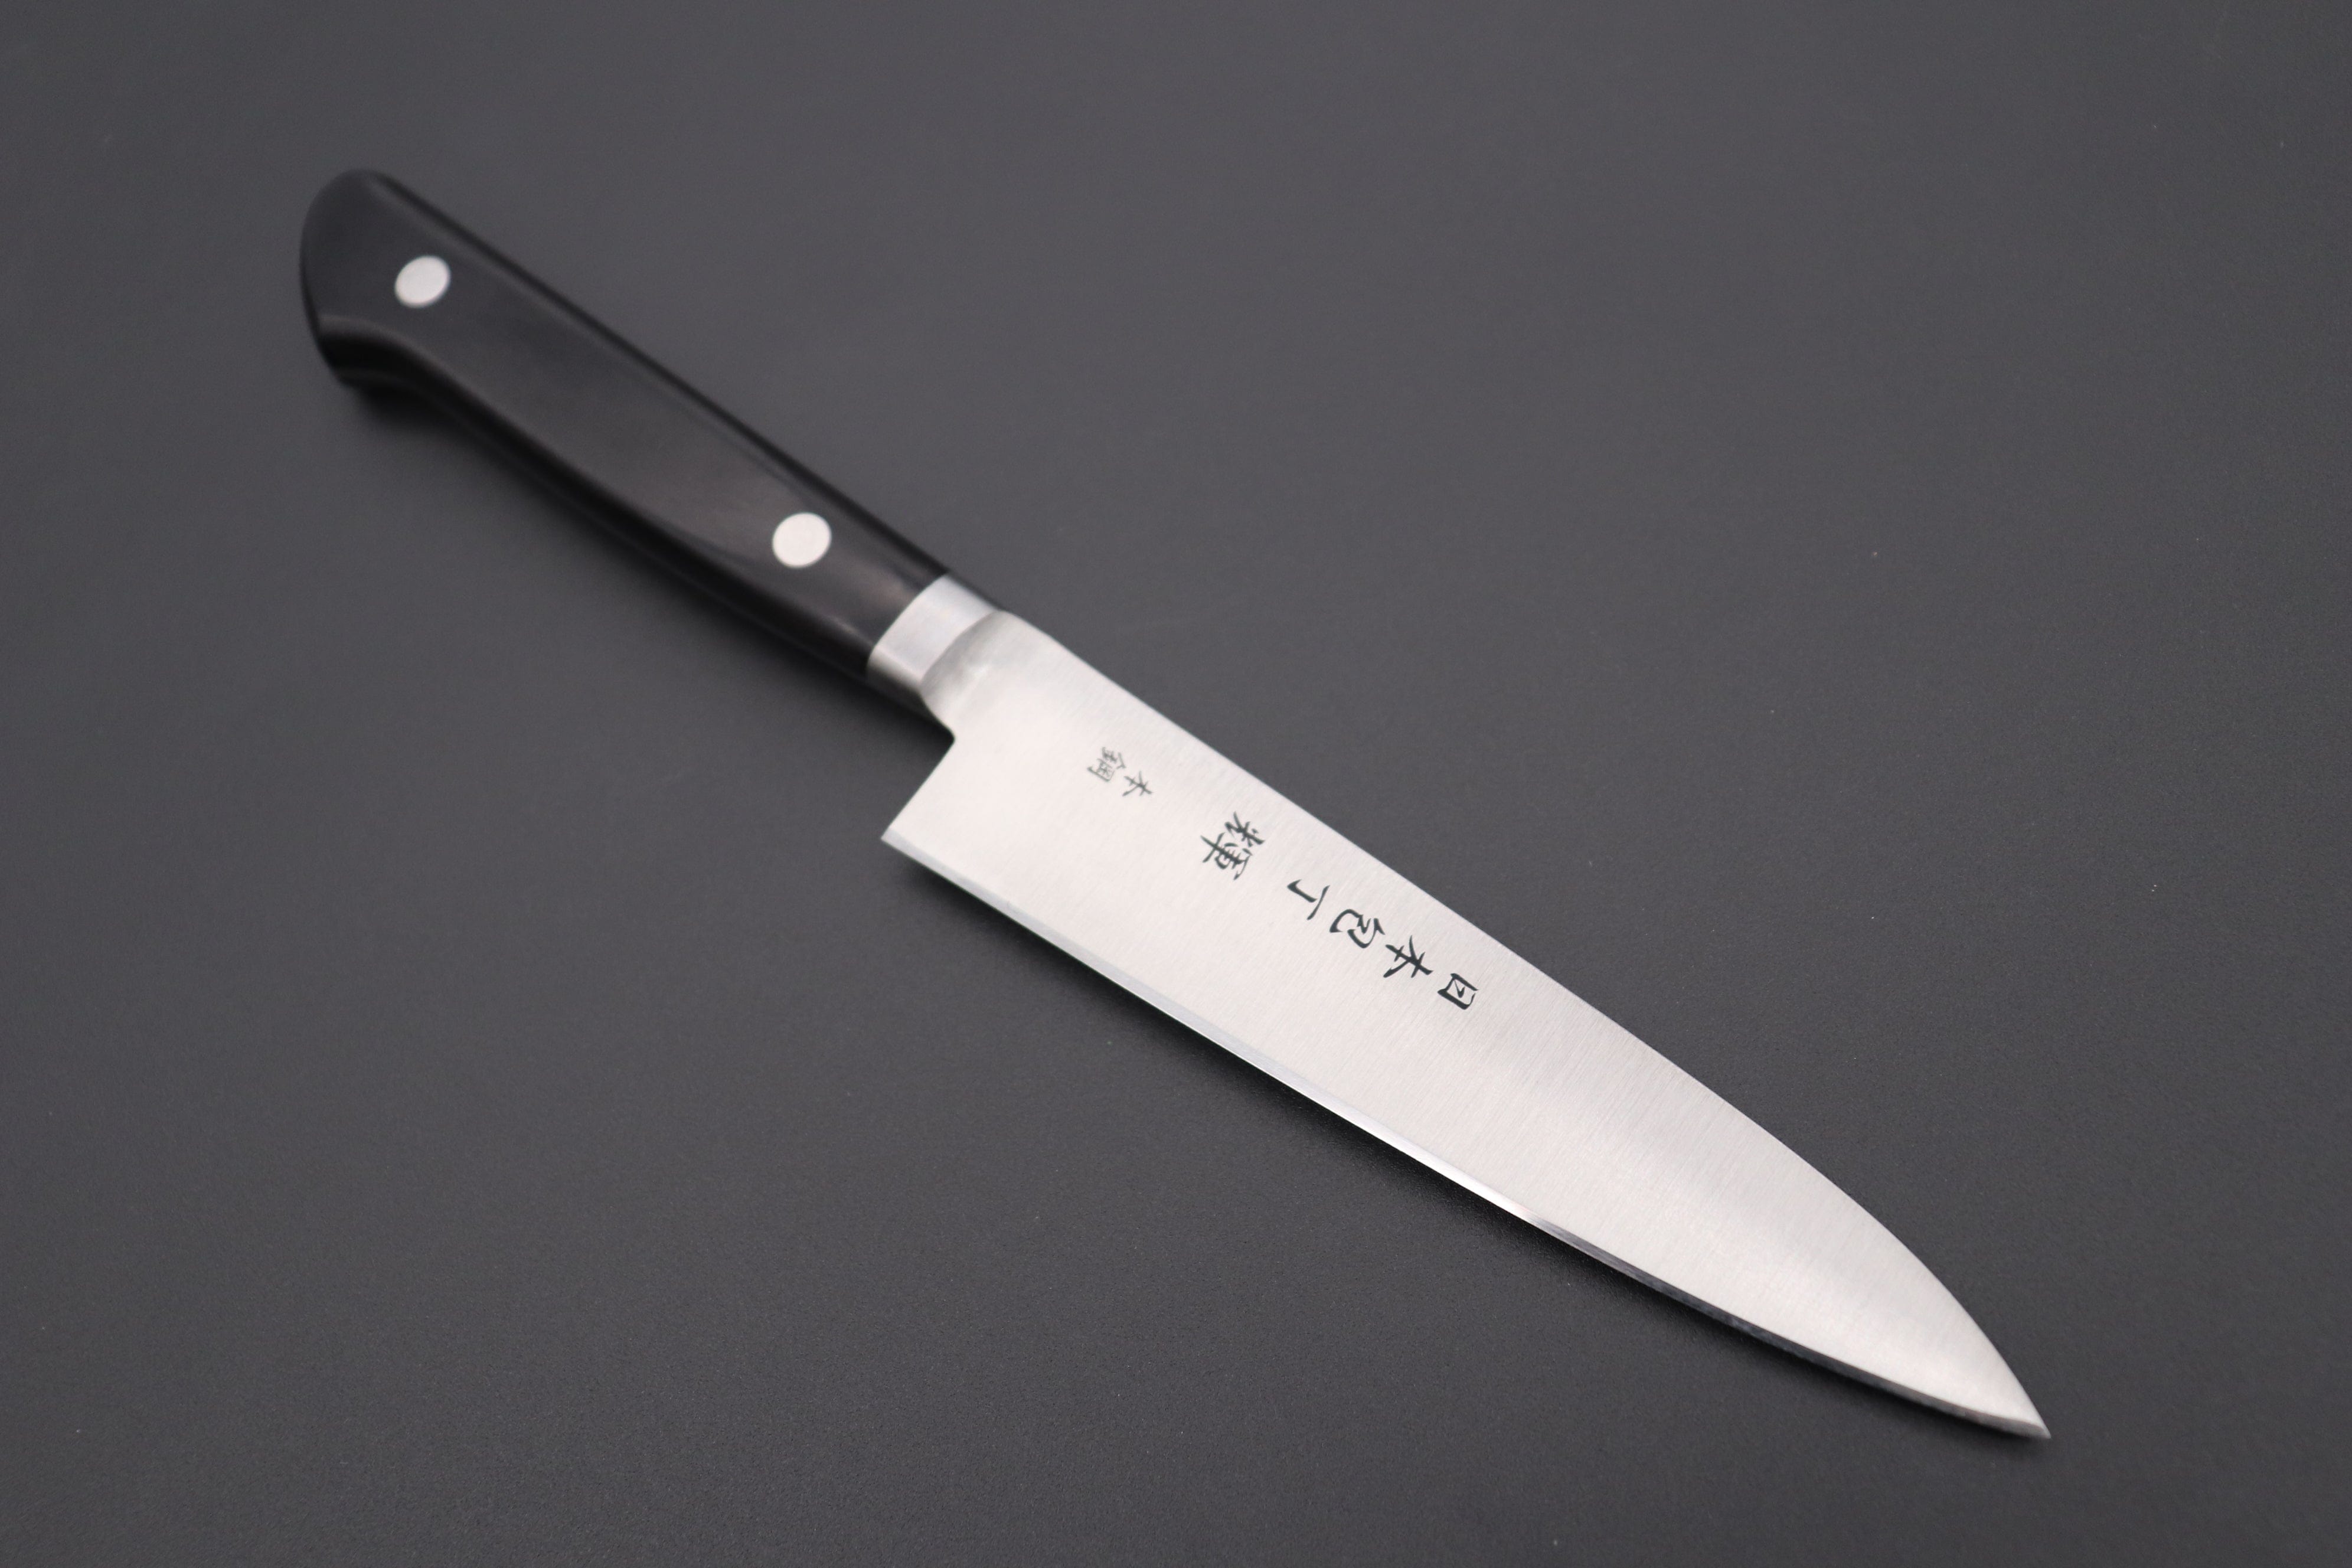 Jck Original Kagayaki CarboNext Japanese Chef’s Knife, KC-2ES Professional Petty Knife, High Carbon Tool Steel Pro Kitchen Knife with Ergonomic